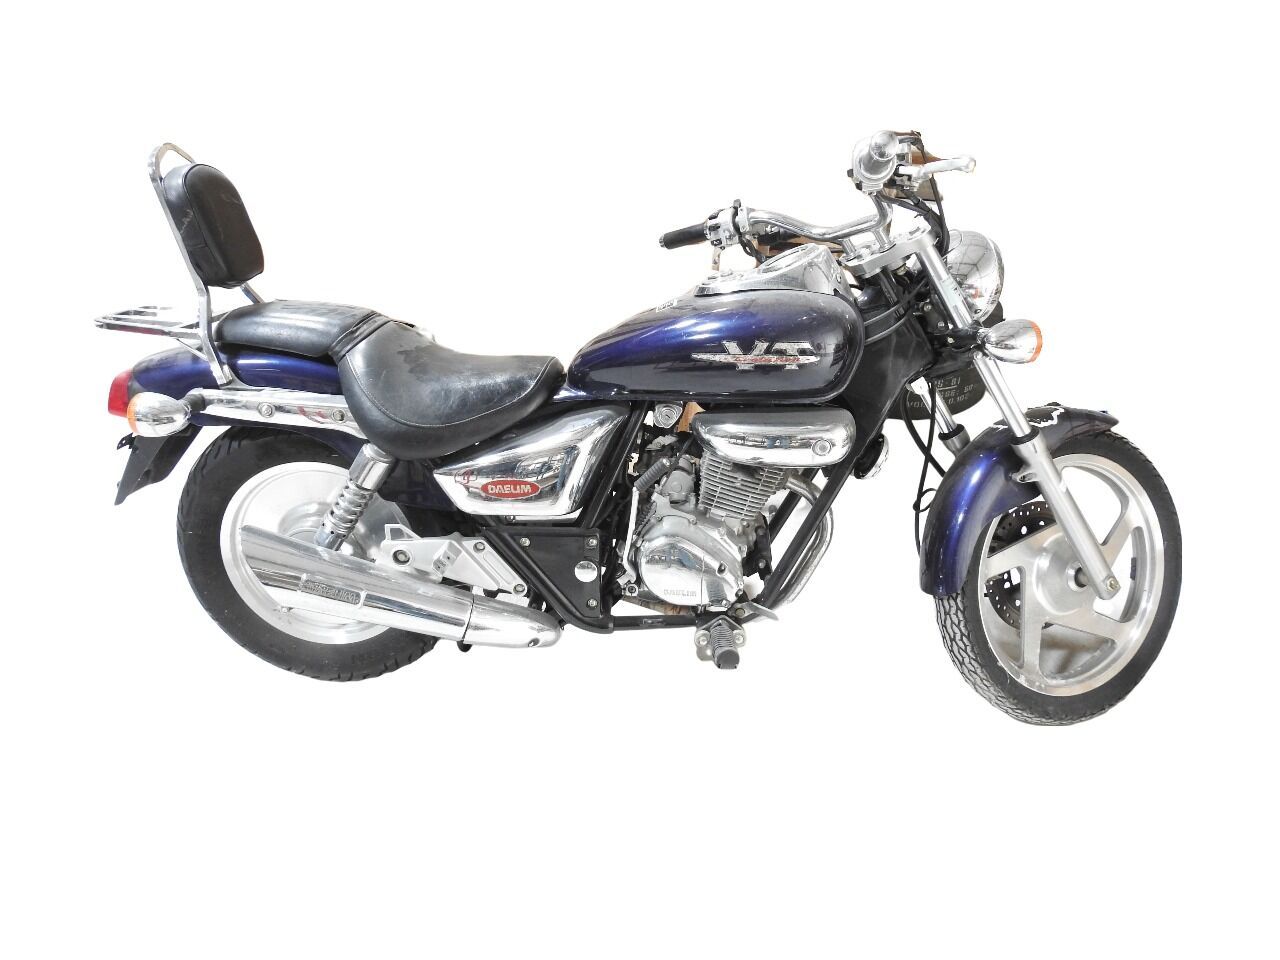 Null DAEMLIN : Moto VT125F. MTF. 1 CV. Année 1999.
N° immatriculation : 9672 TW &hellip;